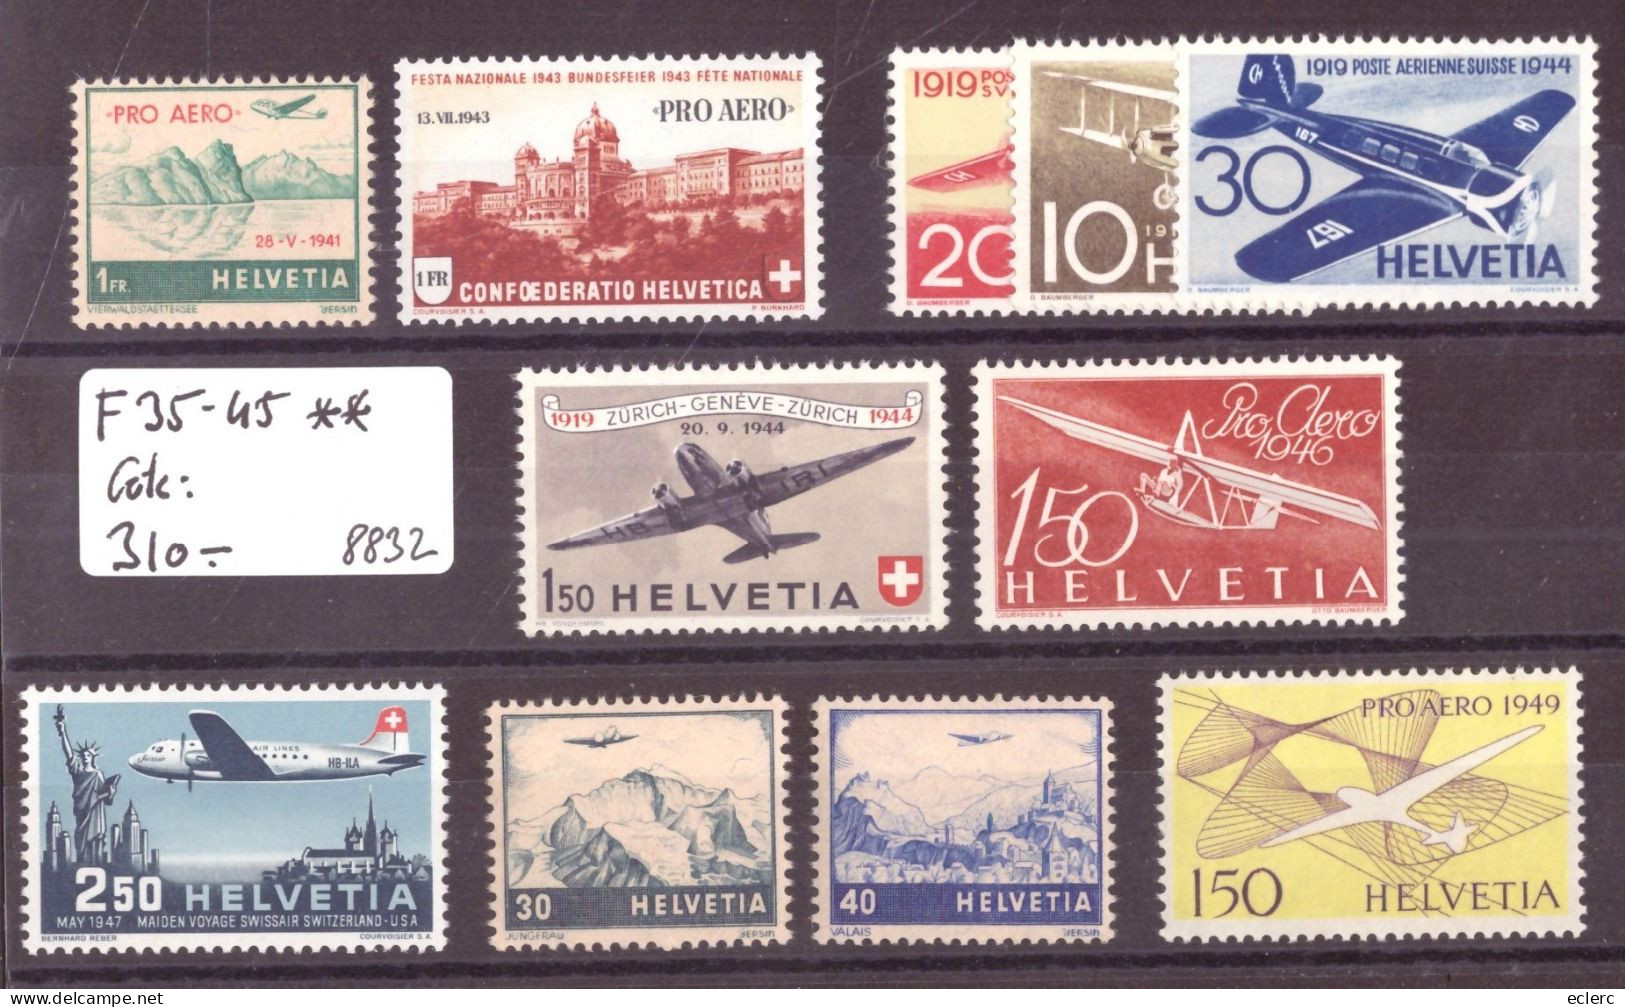 POSTE AERIENNE No F 35-45 ** ( NEUF SANS CHARNIERE ) - COTE: 310.- - Unused Stamps